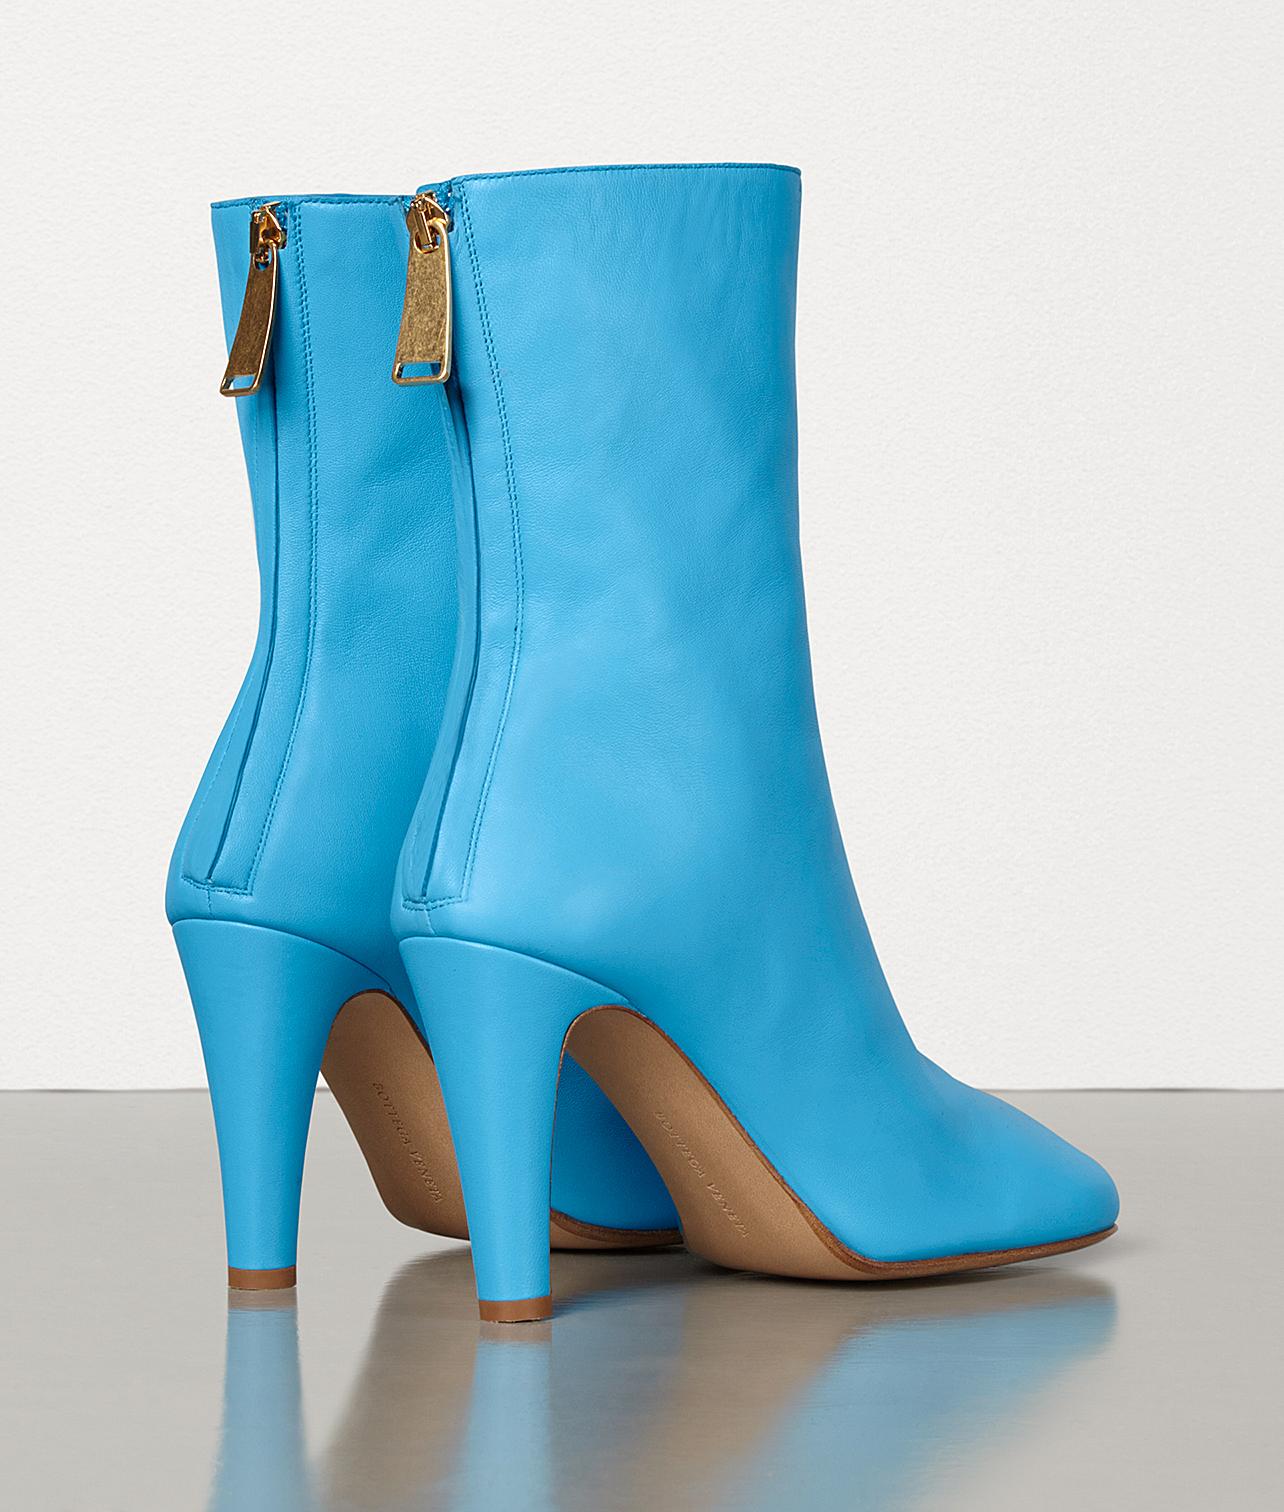 Bottega Veneta Boots In Nappa Dream in Blue - Lyst